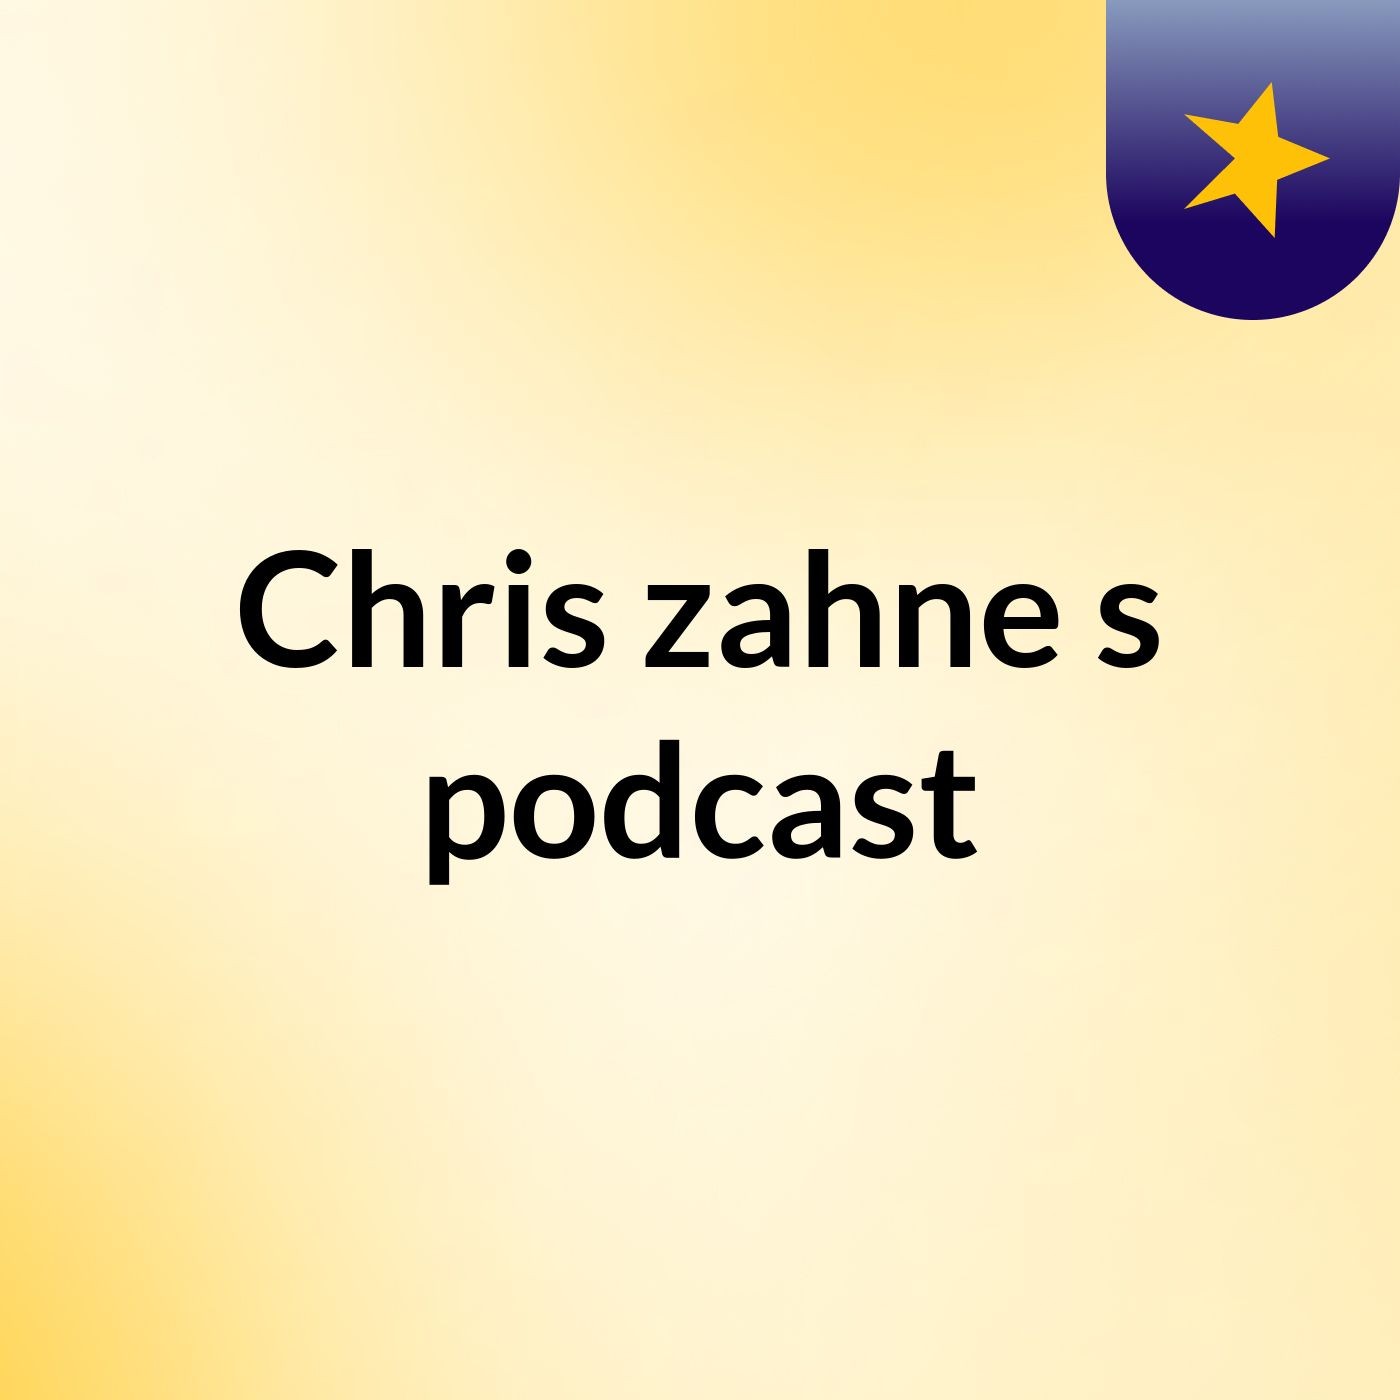 Chris zahne's podcast